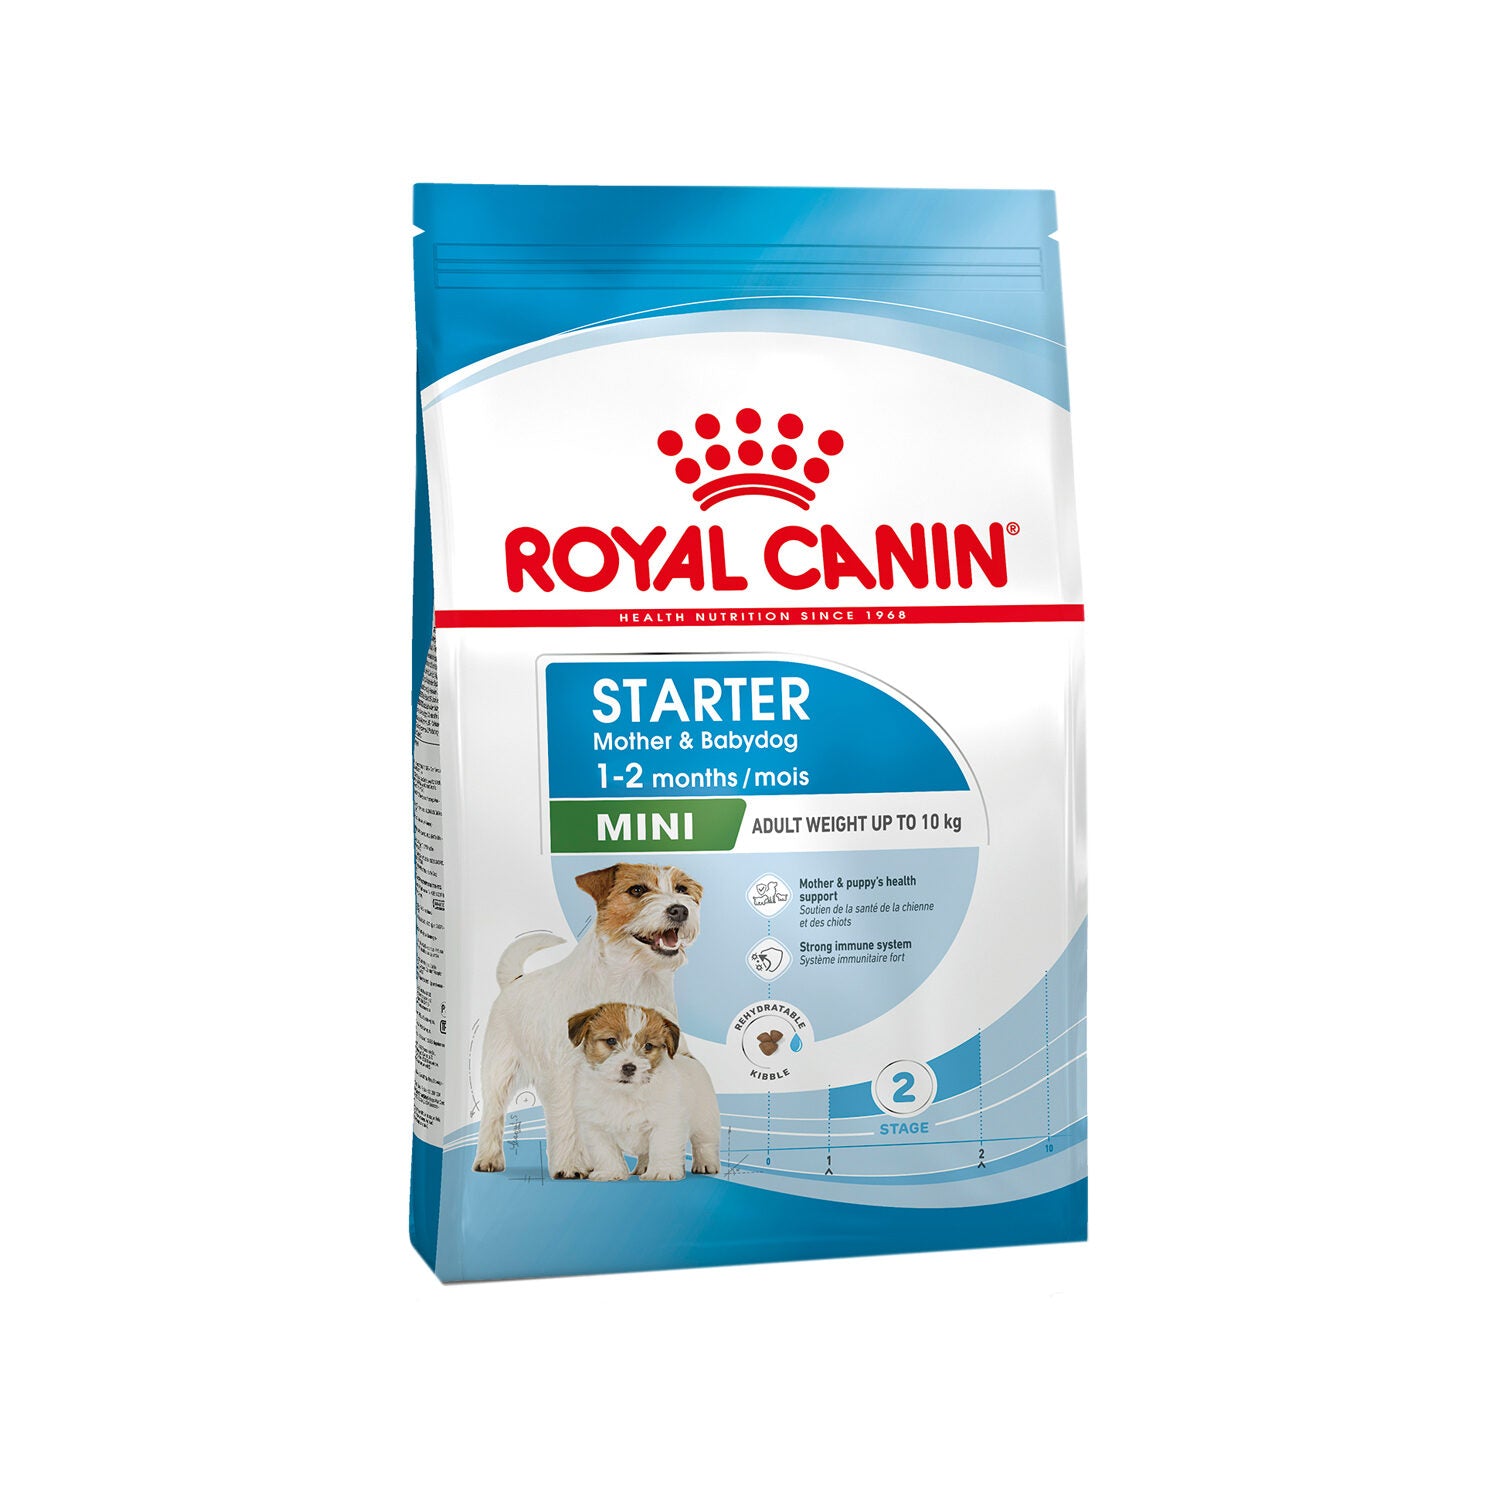 Royal Canin Starter Mini Mother & Babydog Dry Food